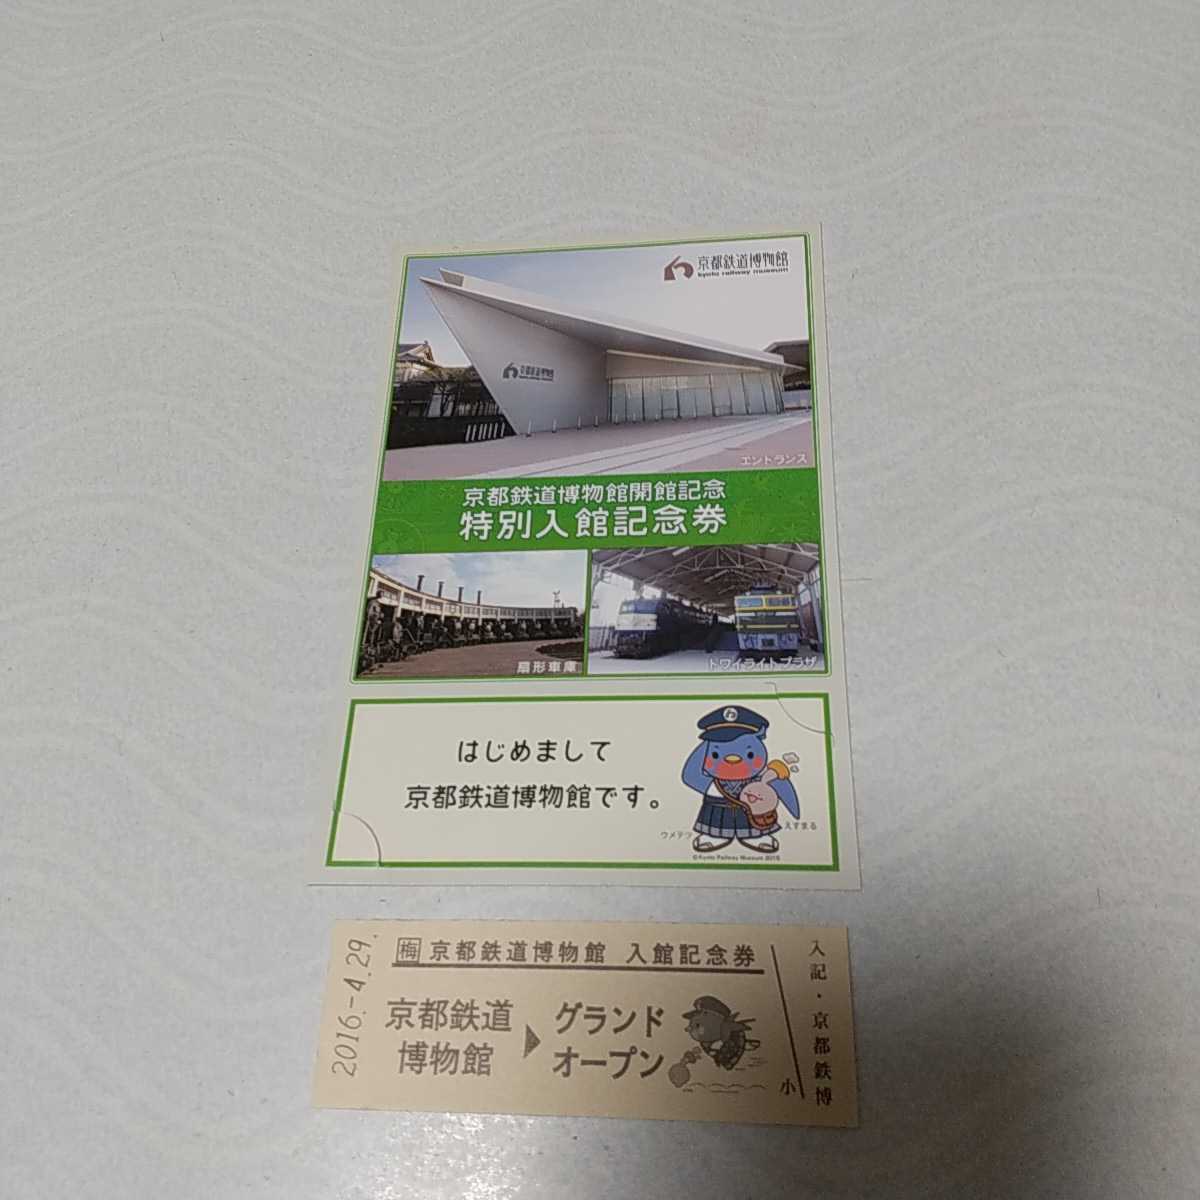 JN-24 Kyoto railroad museum . pavilion memory * special go in pavilion memory ticket 